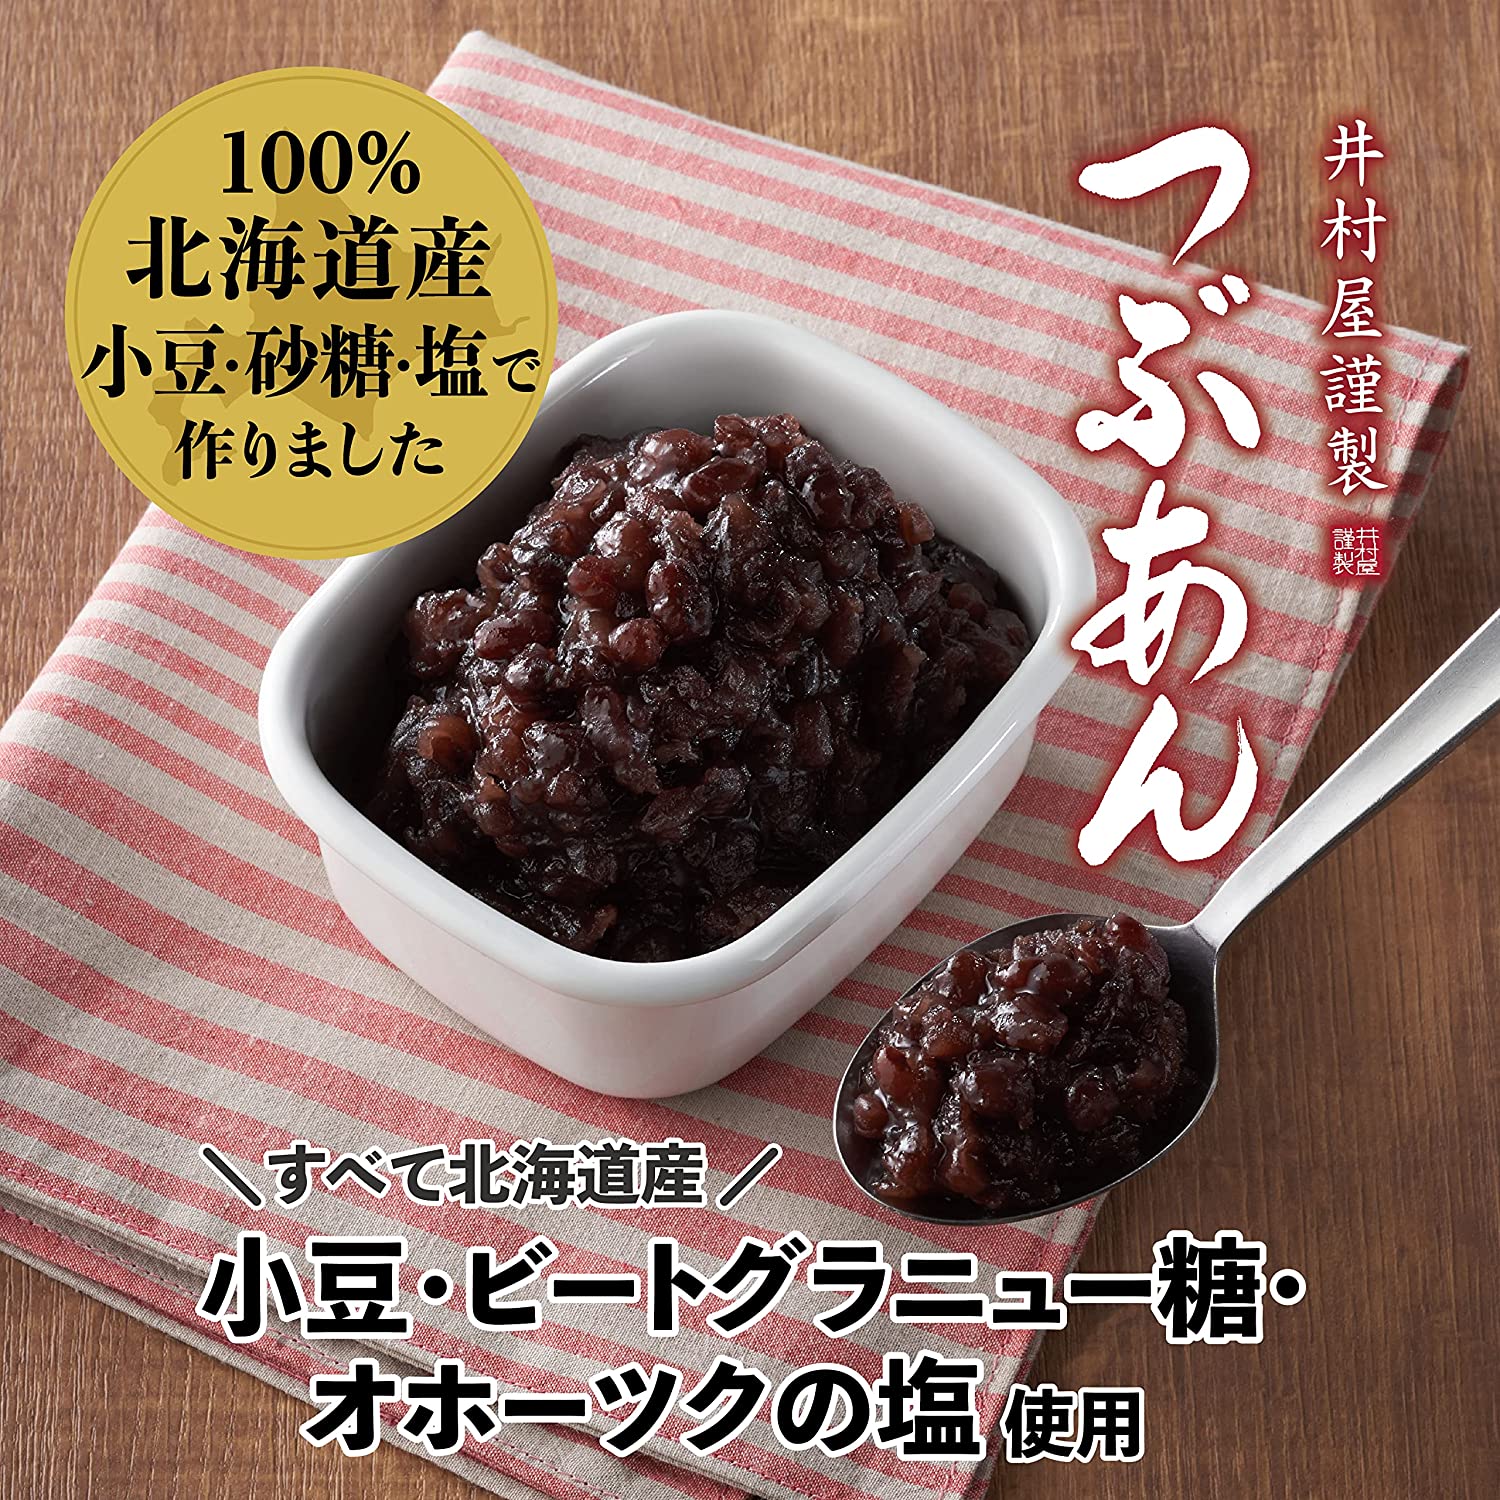 IMURAYA Tsubuan Red Bean Paste, Coarse